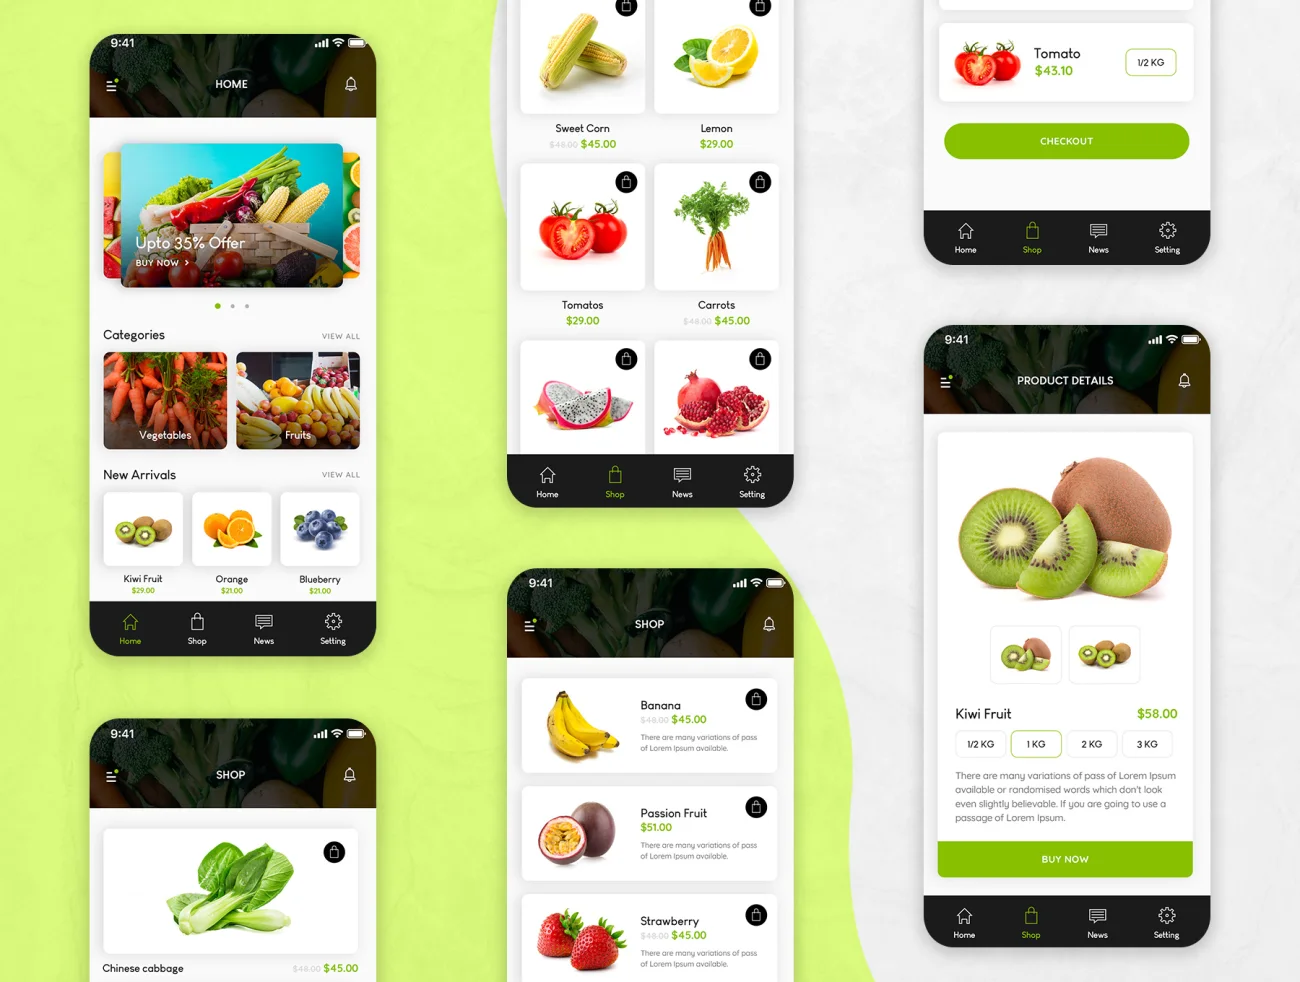 Fluda App Ui Kit PSD 21屏有机蔬菜水果在线商店手机应用Ui设计套件PSD-UI/UX-到位啦UI